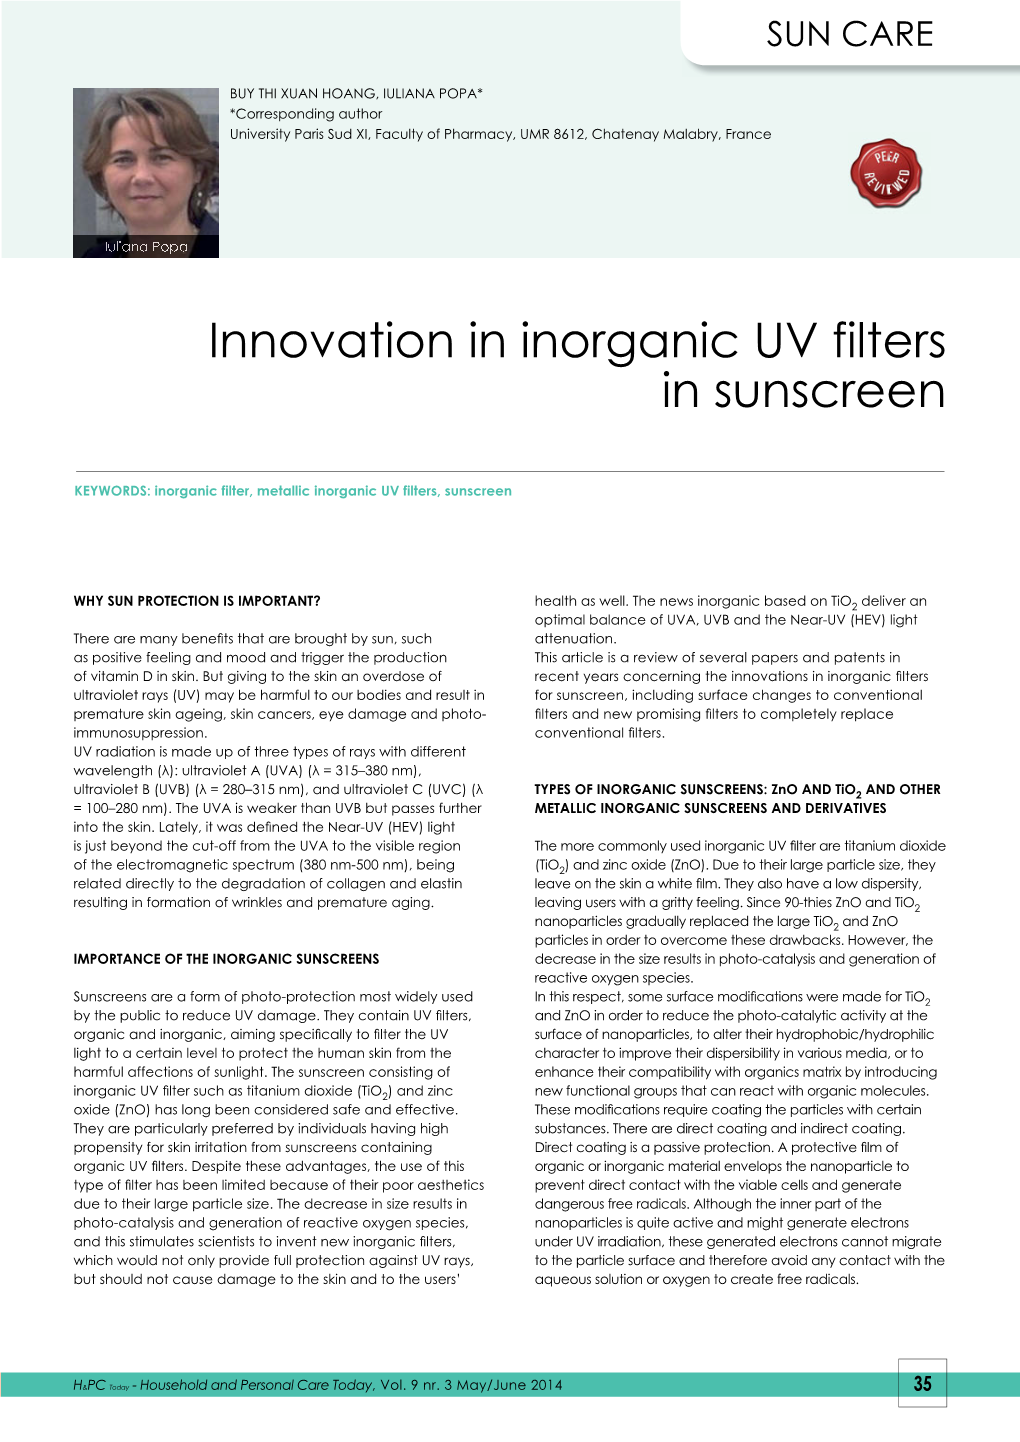 Innovation in Inorganic UV Filters in Sunscreen